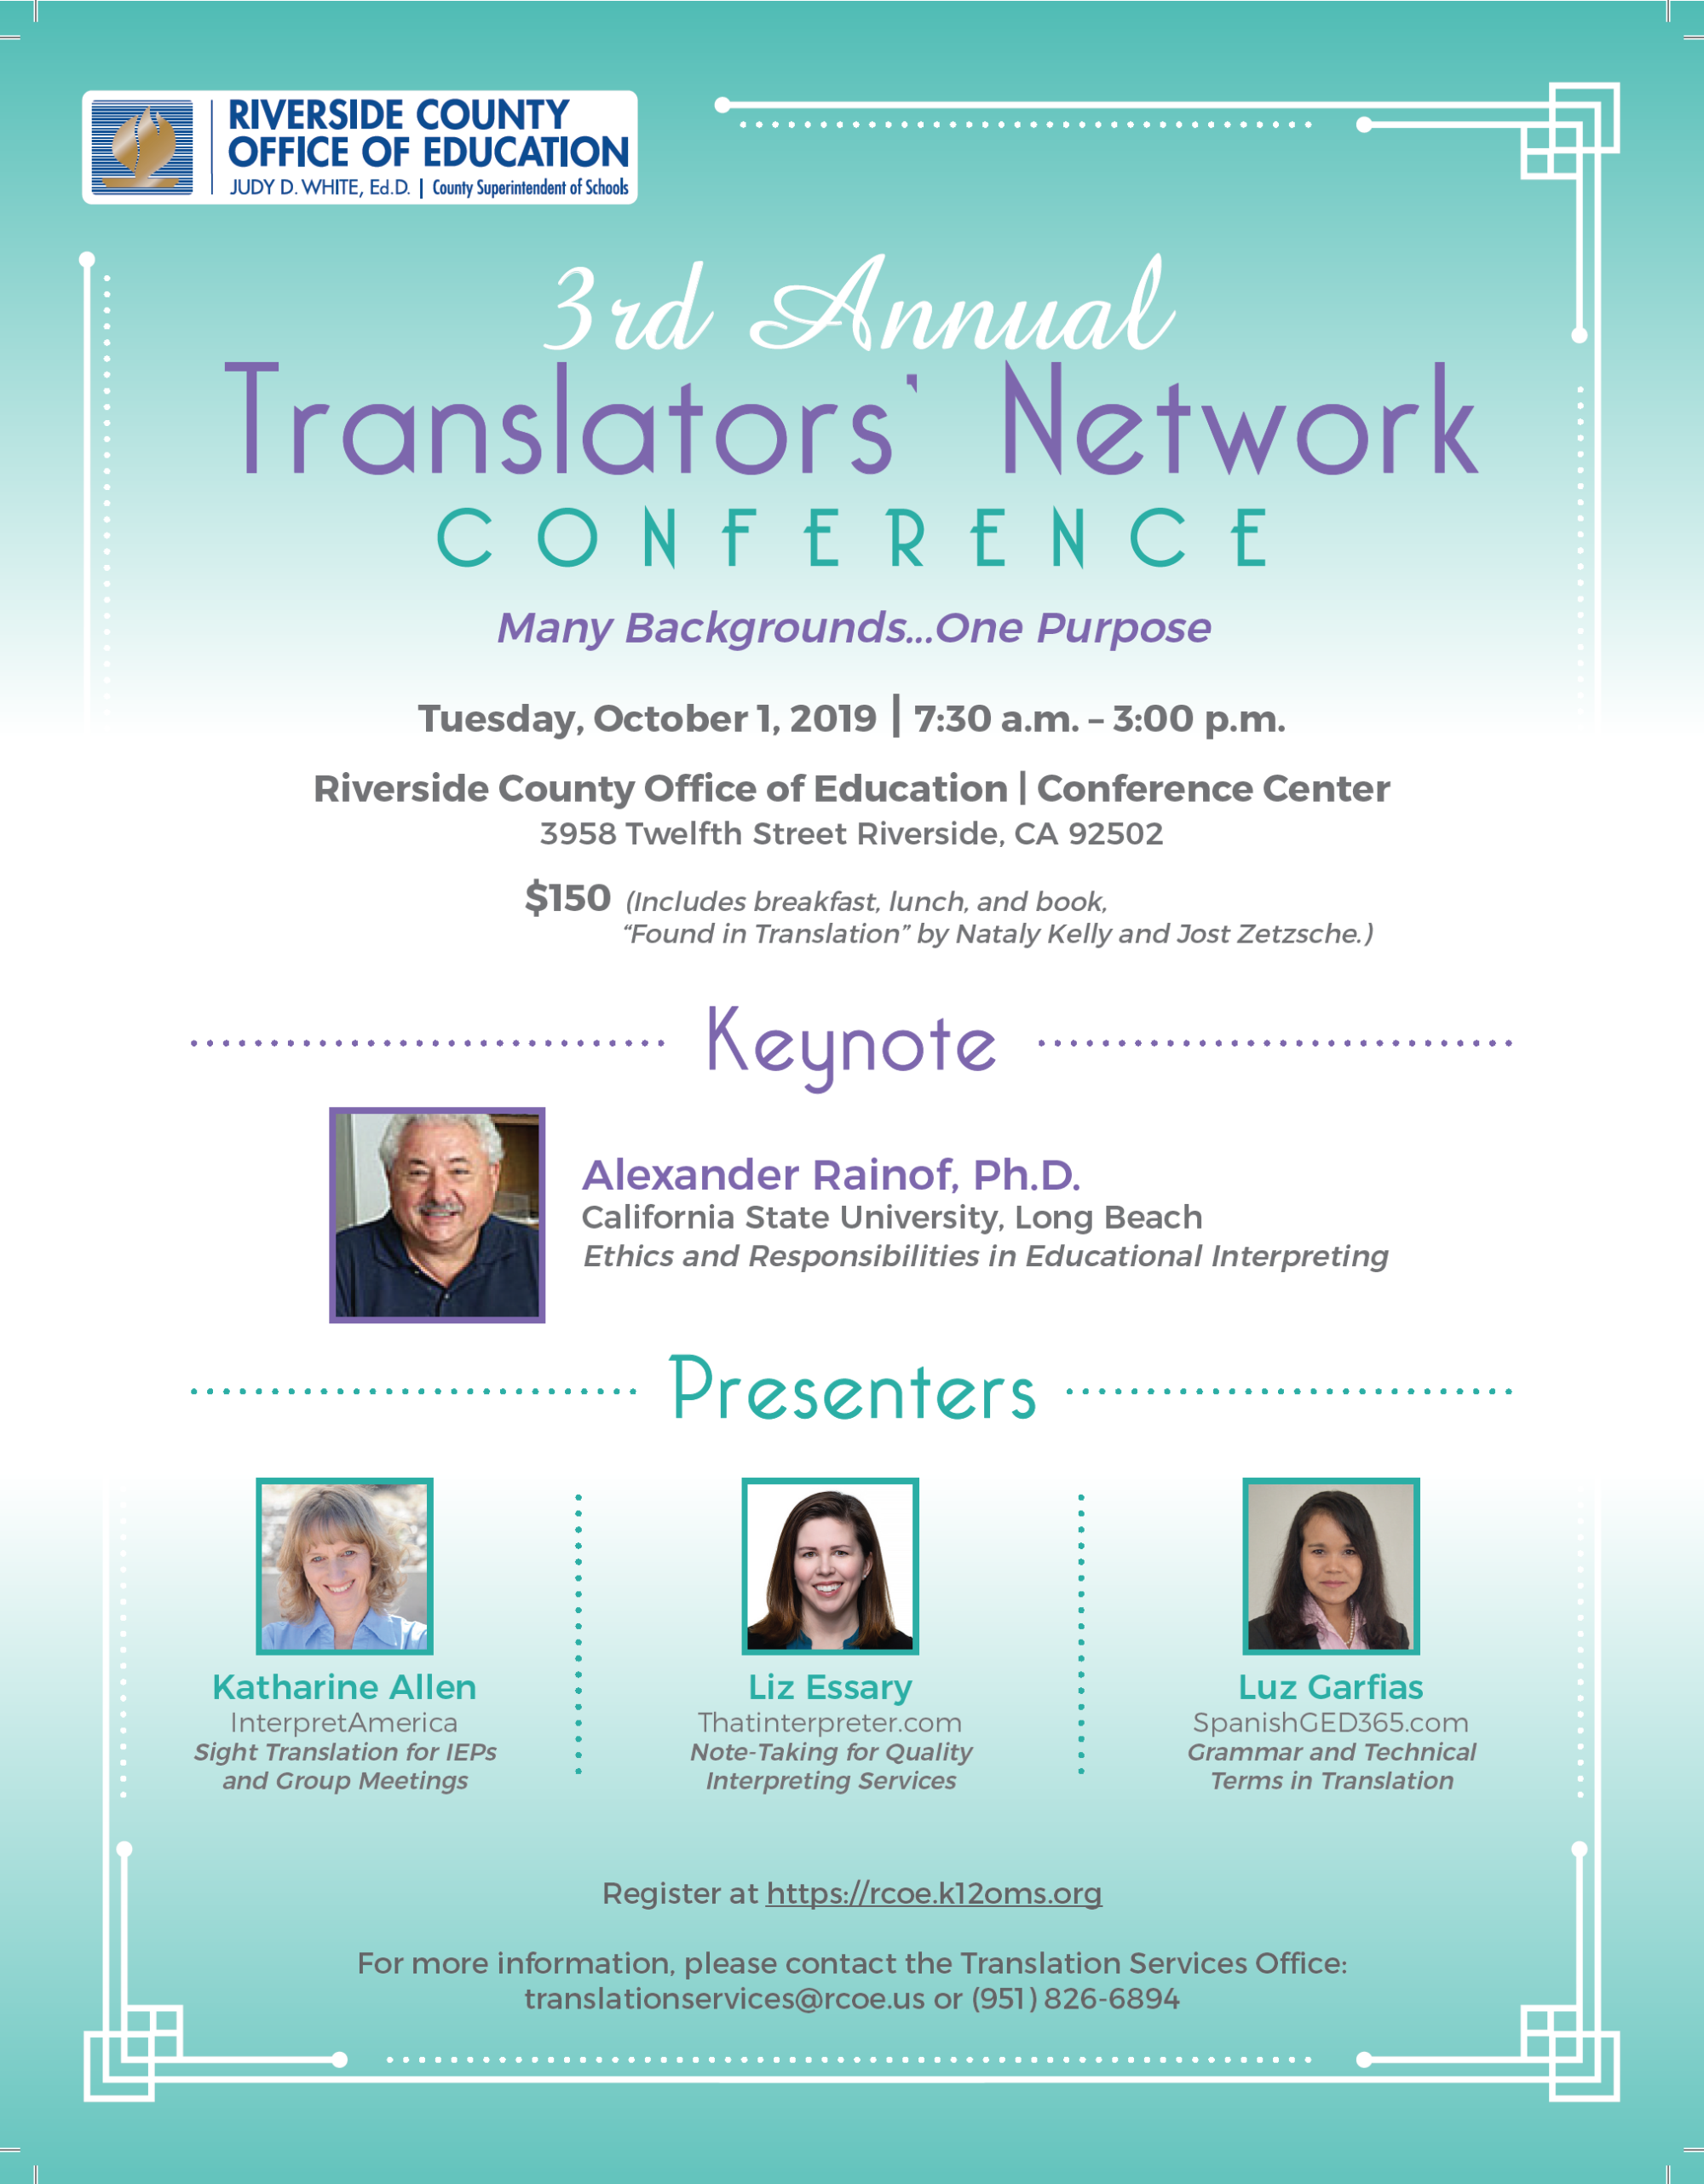 Translators Network Poster 19-20